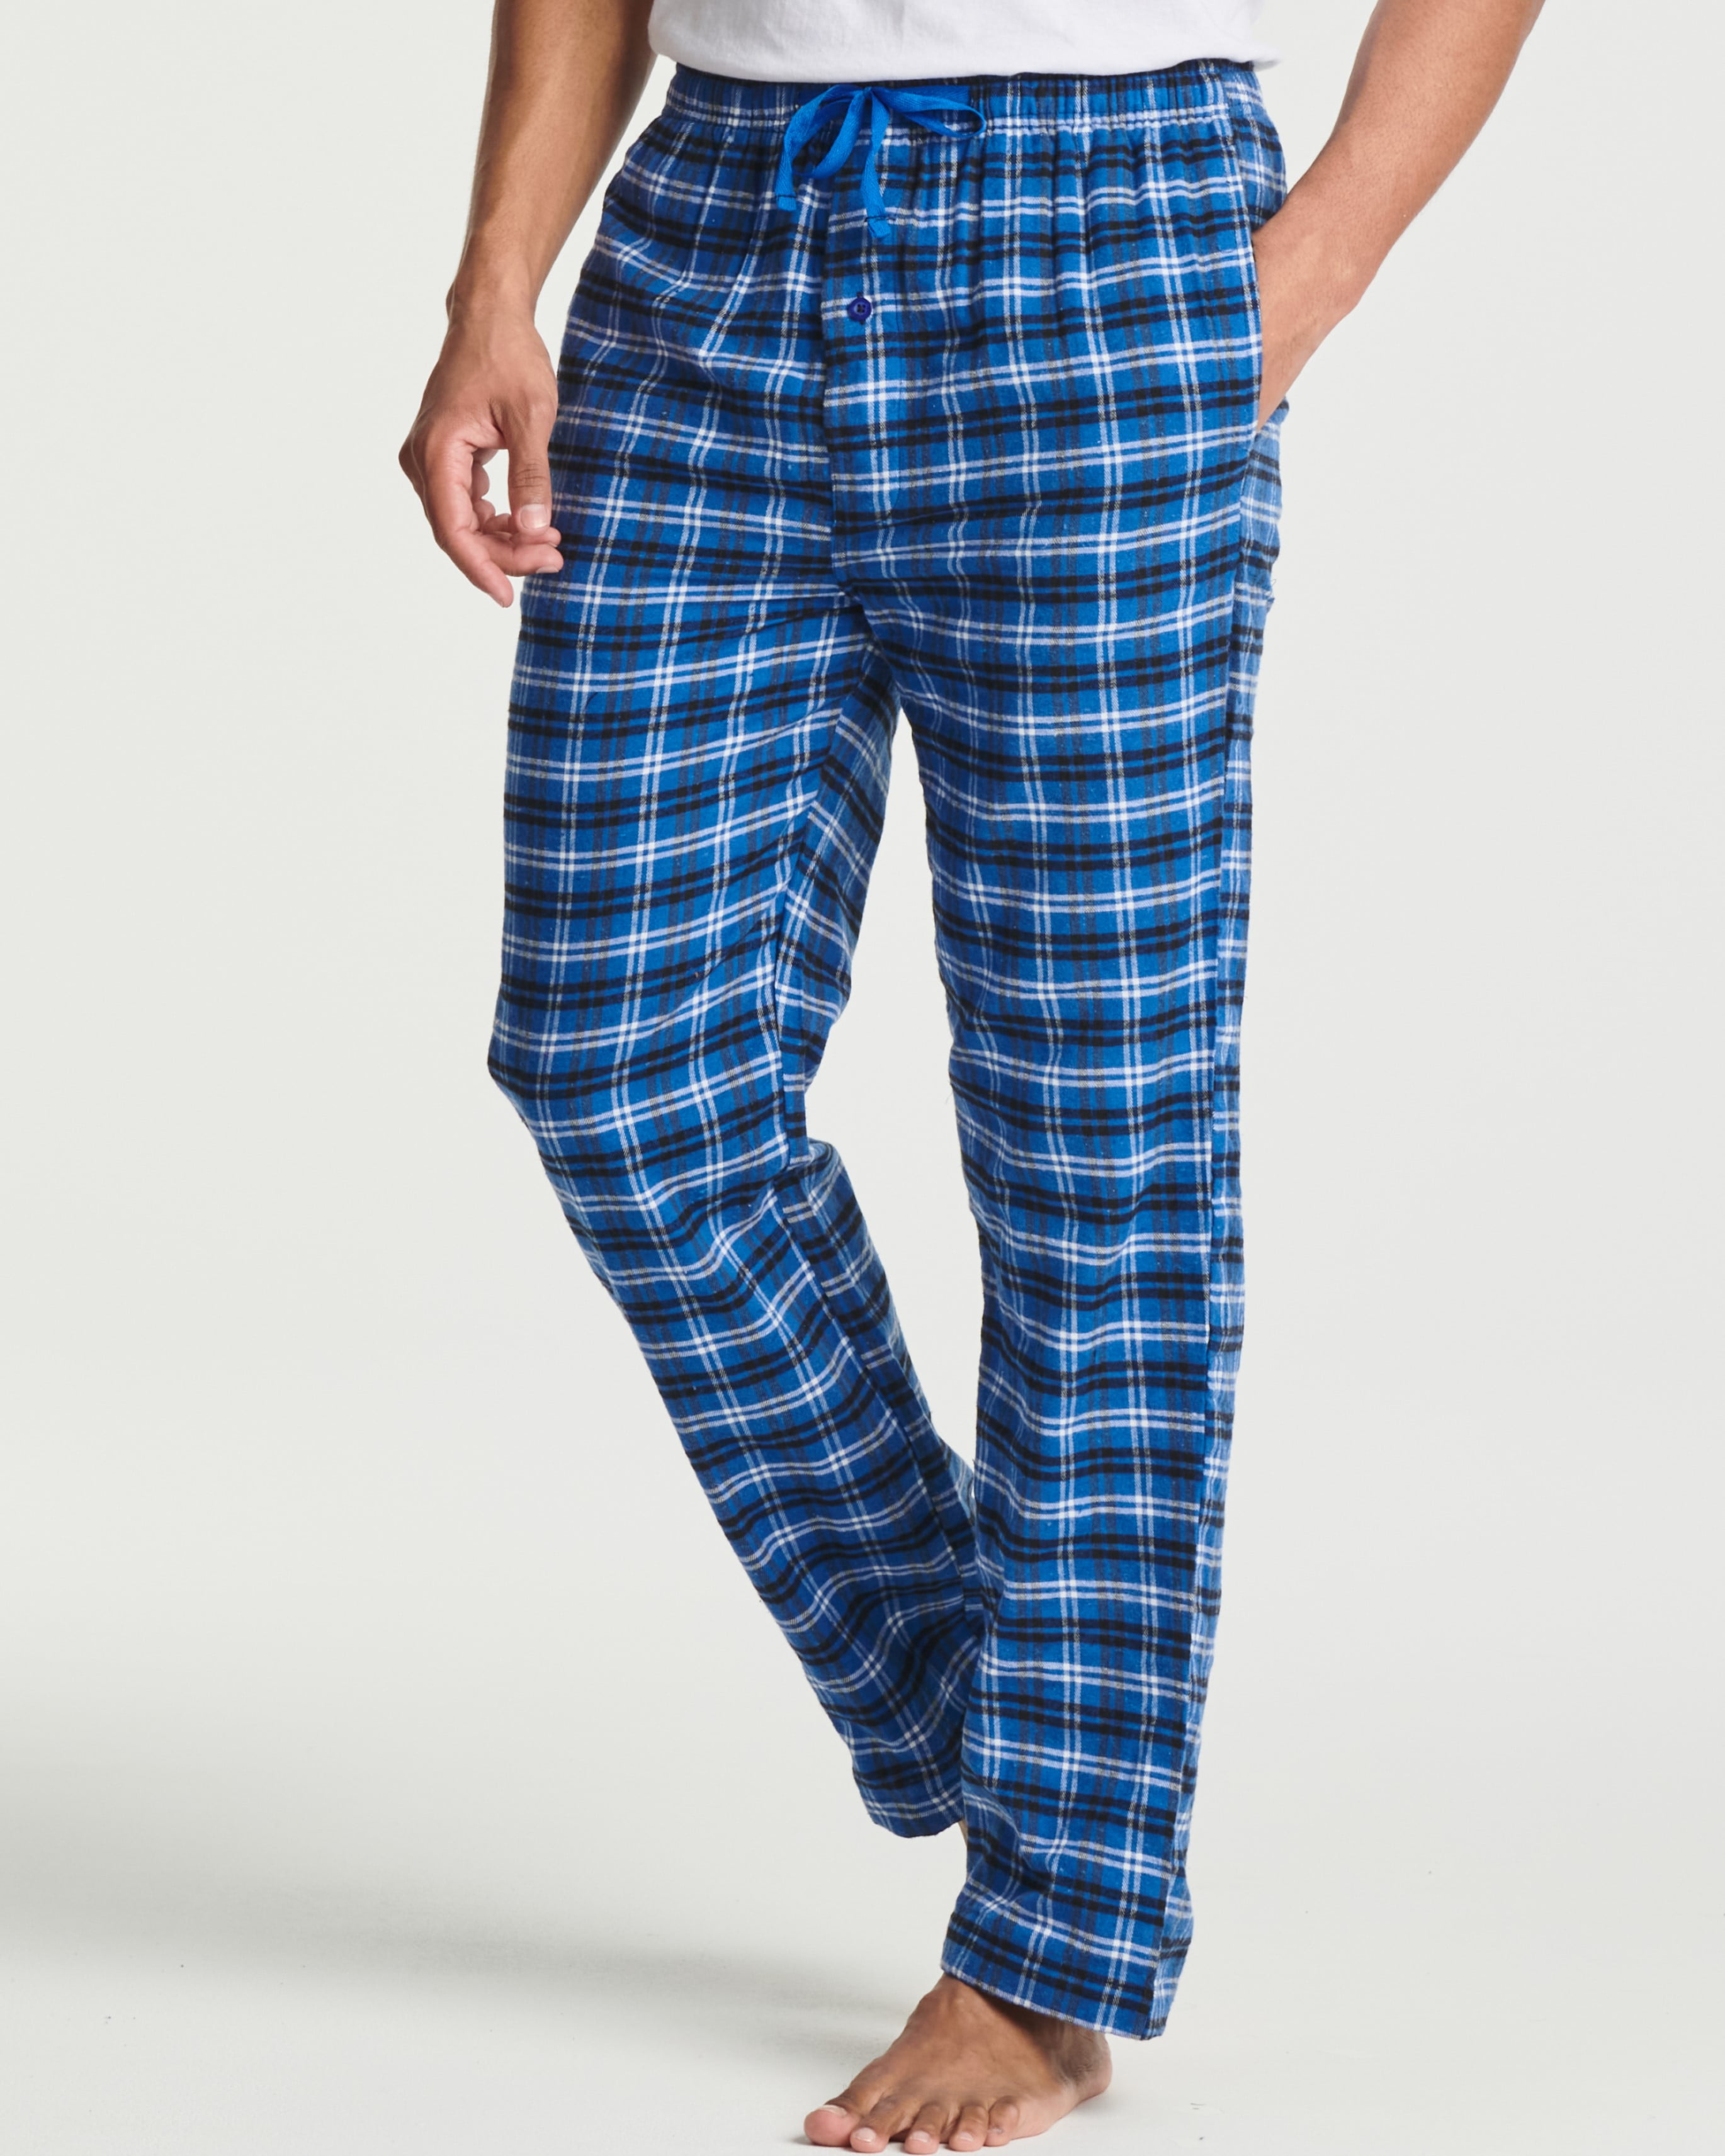 Real Essentials Mens Blue Red Plaid Pajama Pants Size XXXL - beyond exchange